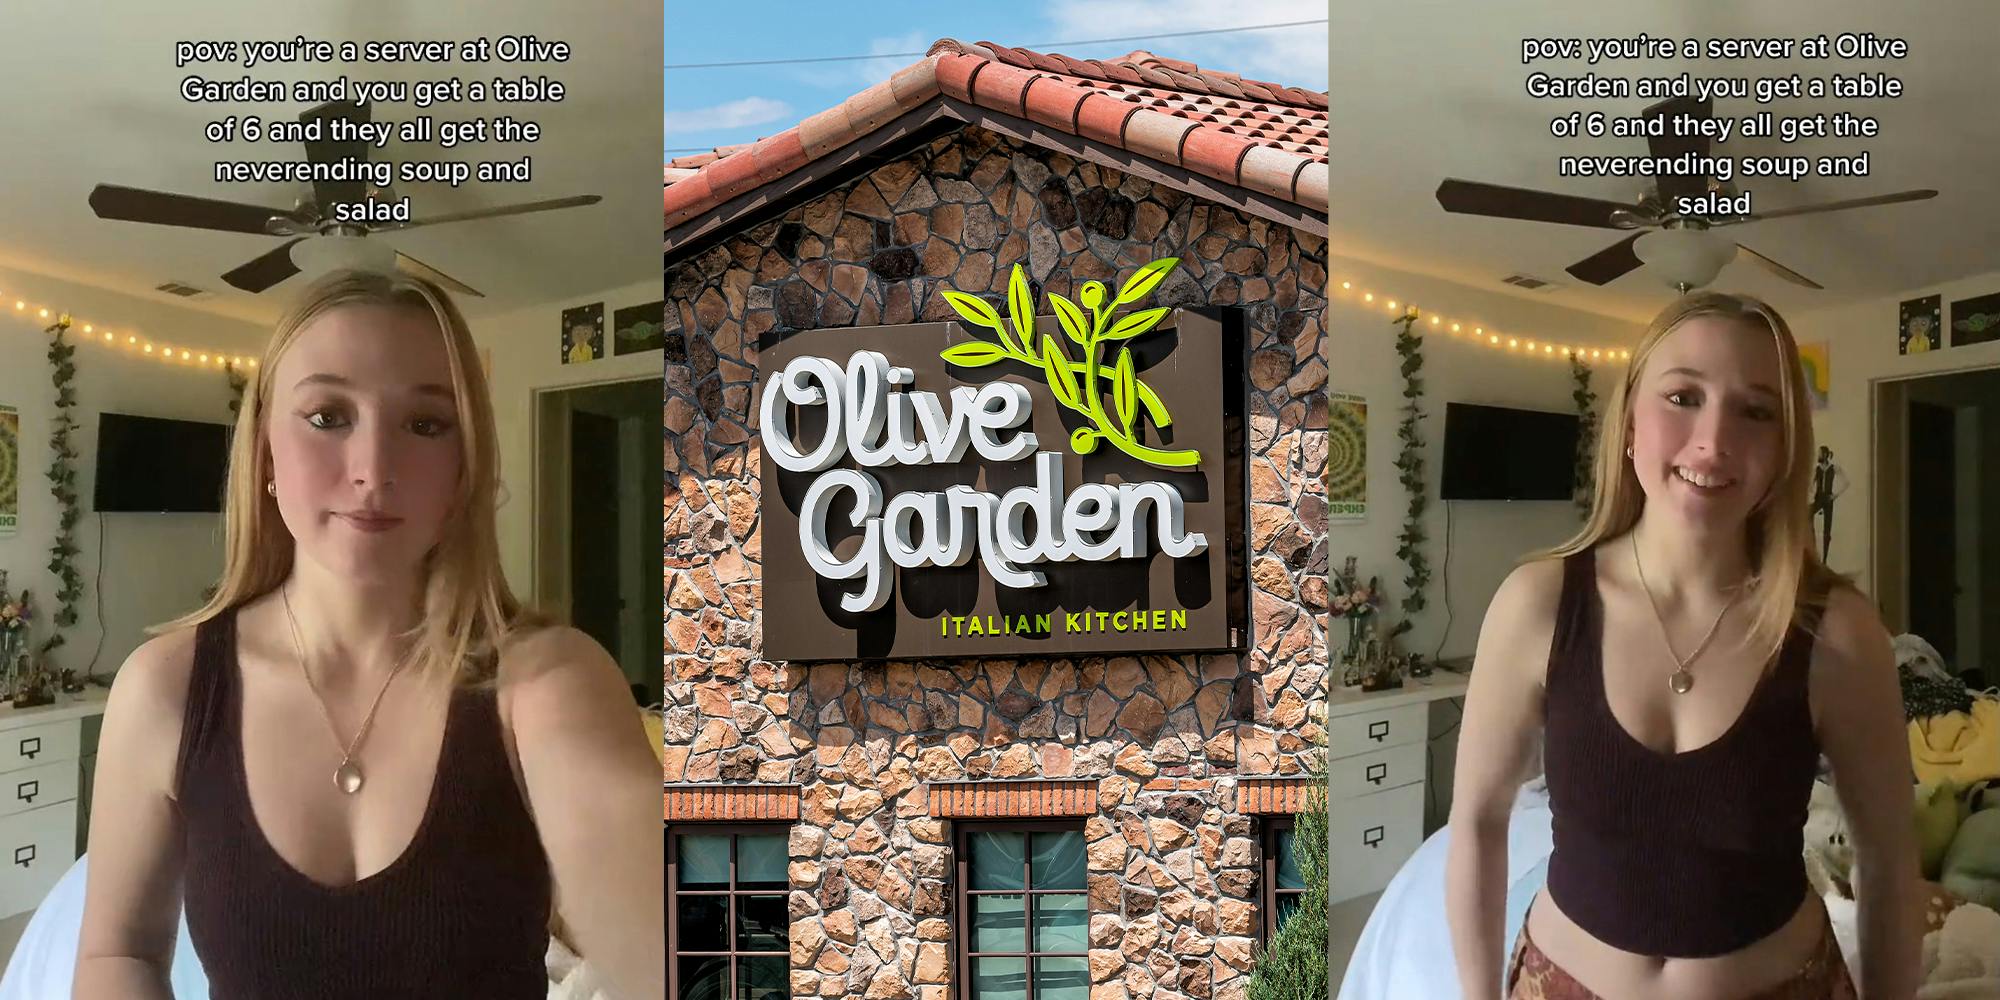 Olive Garden Worker Puts Never-Ending Soup and Salad on Blast